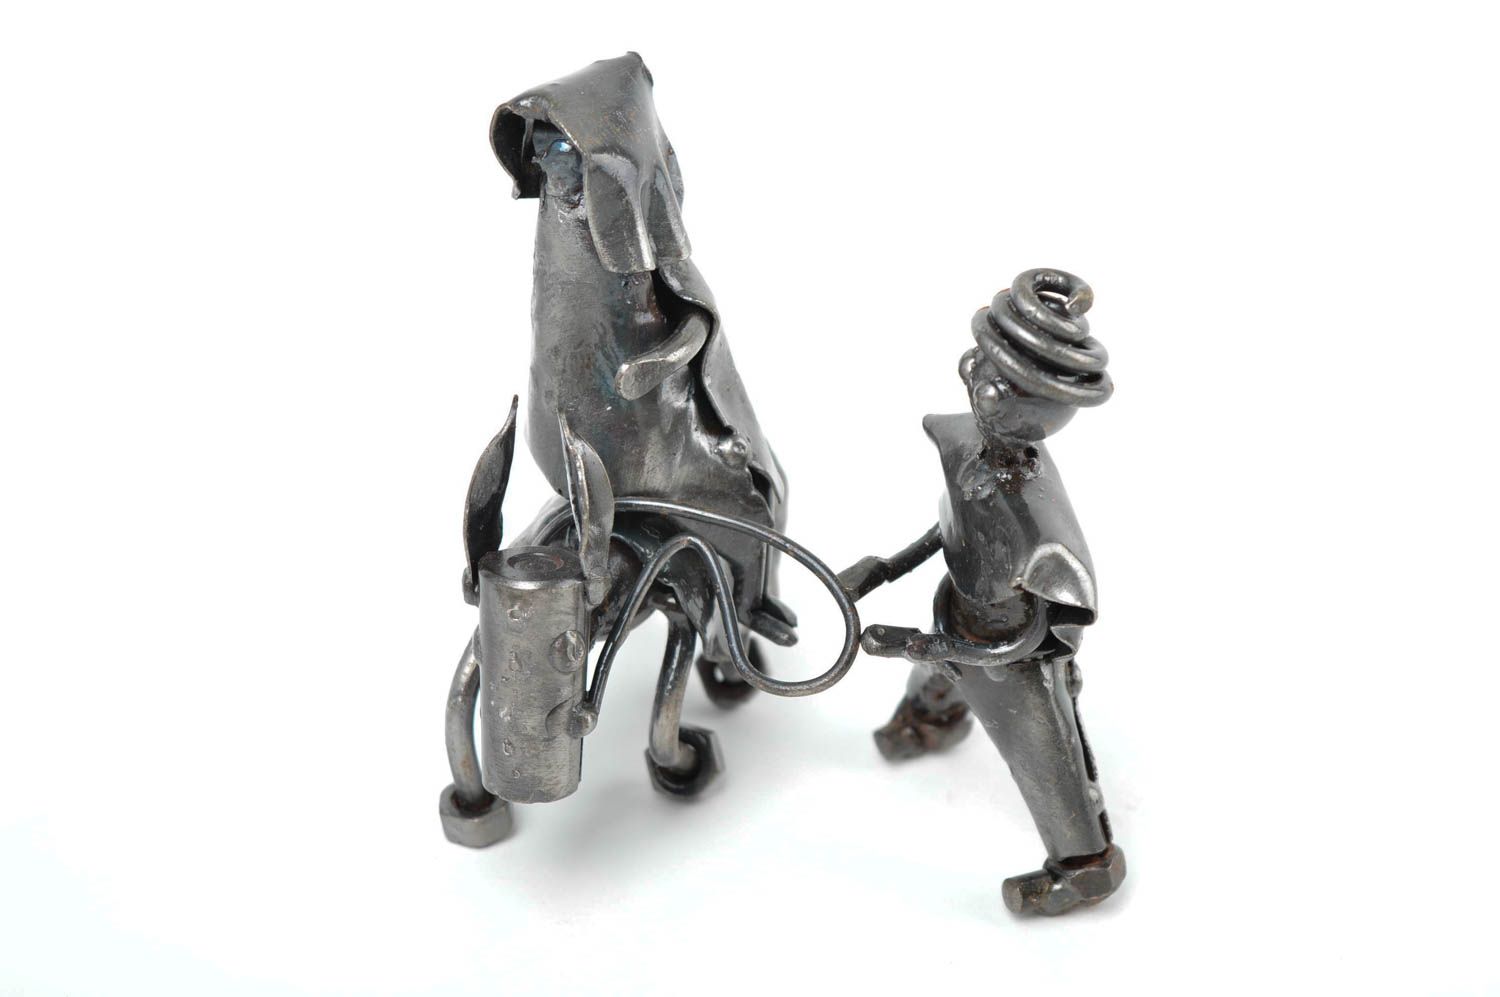 Unusual handmade figurine metal figurines metal craft decorative use only photo 2